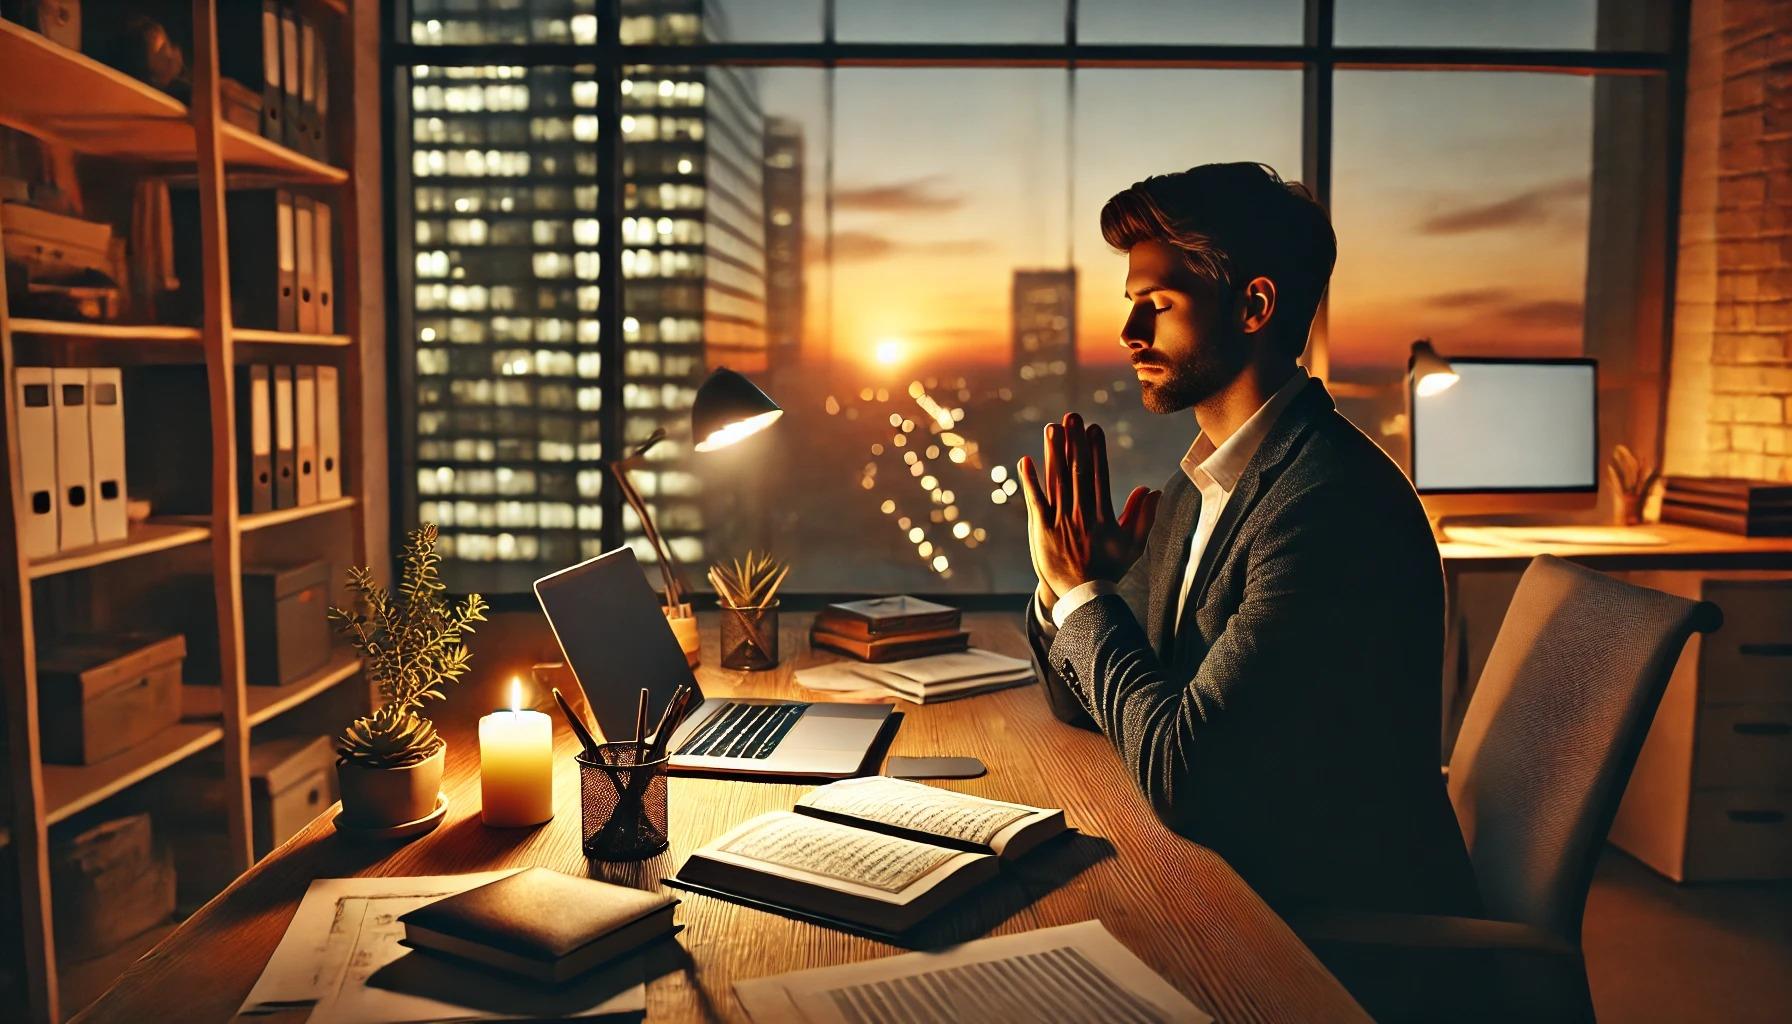 20 Prayers For Work Stress